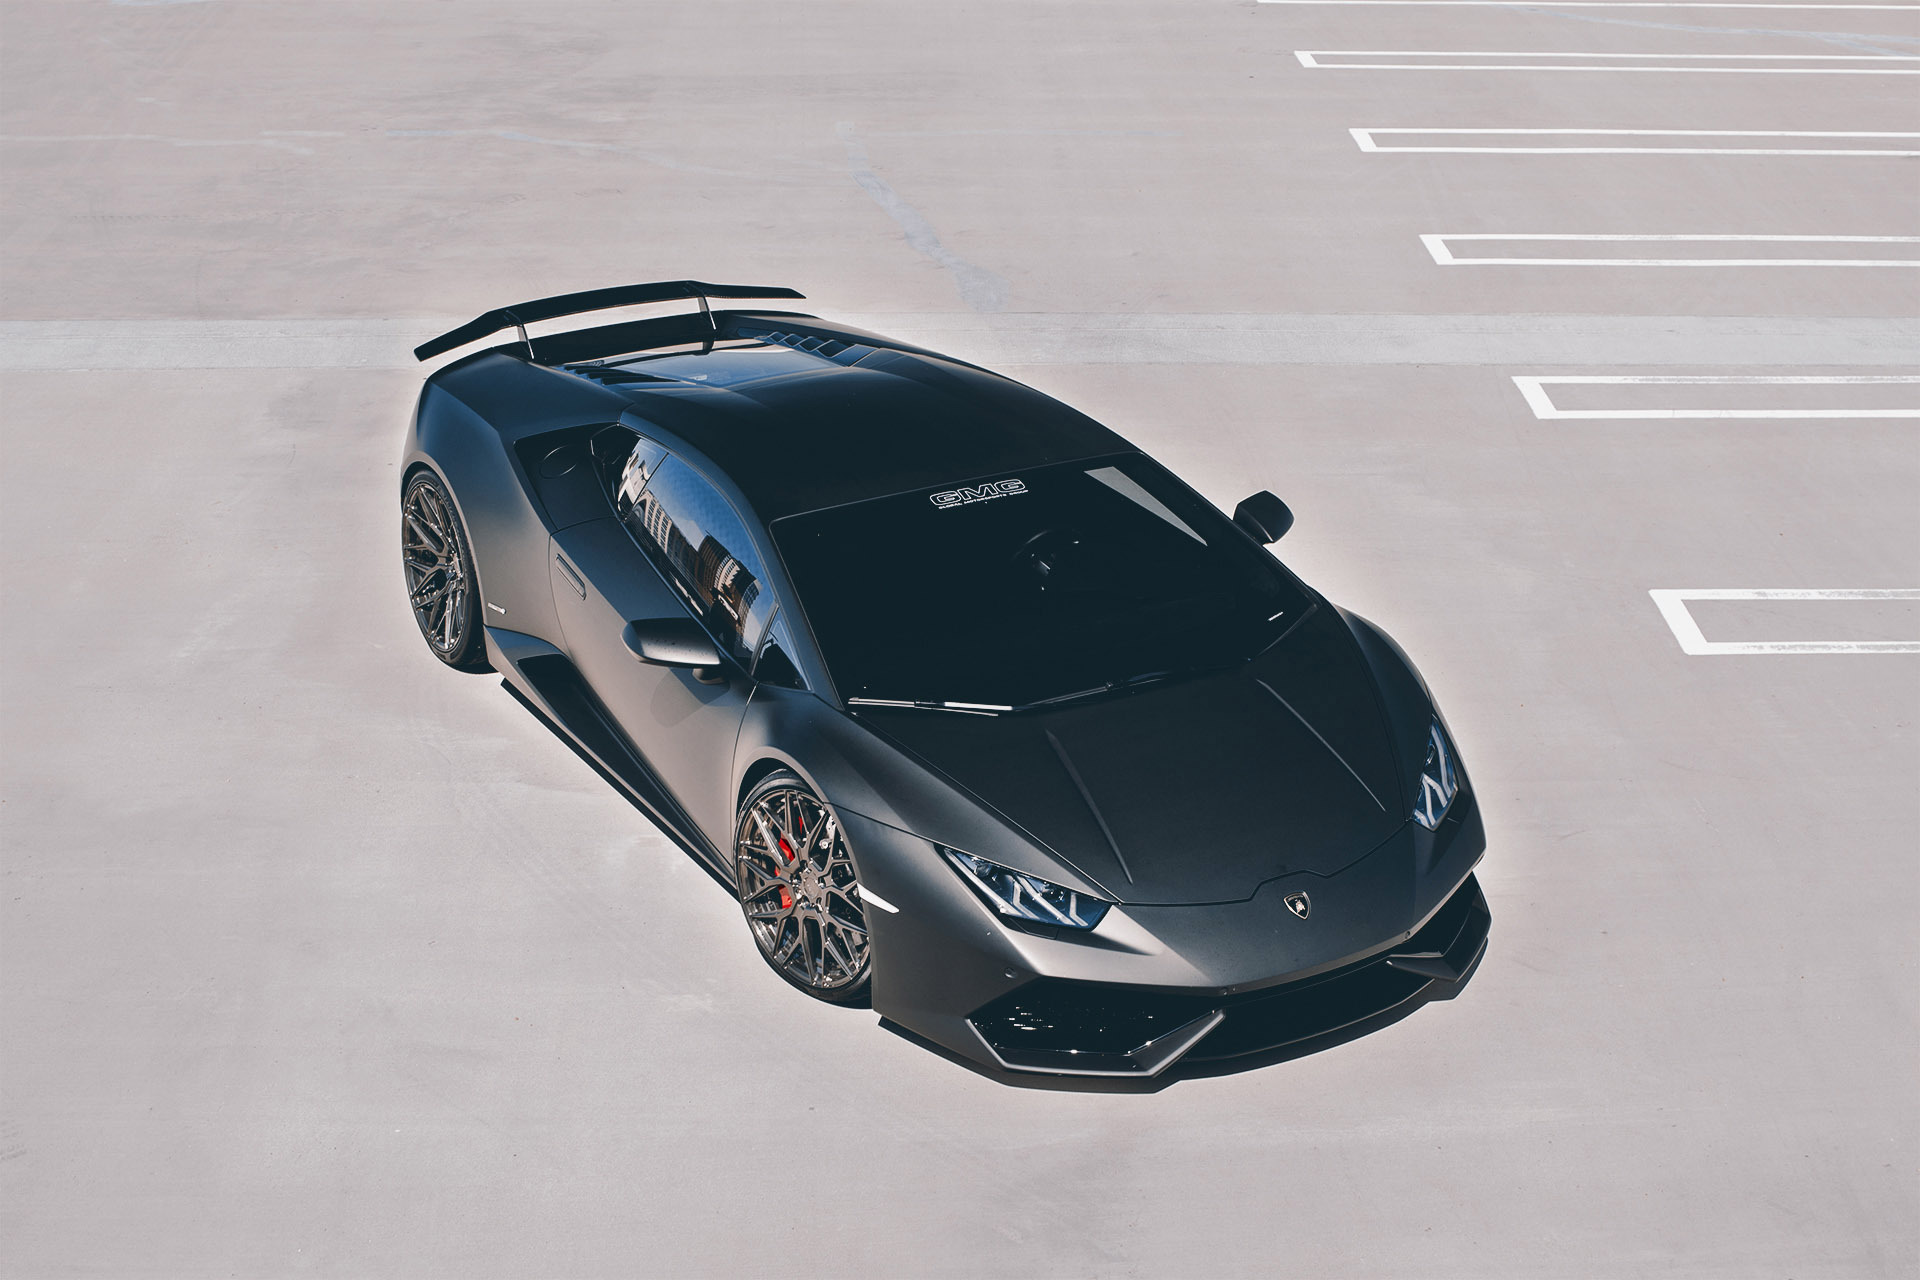 Baixe gratuitamente a imagem Lamborghini, Carro, Super Carro, Veículos, Carro Preto, Lamborghini Huracán na área de trabalho do seu PC